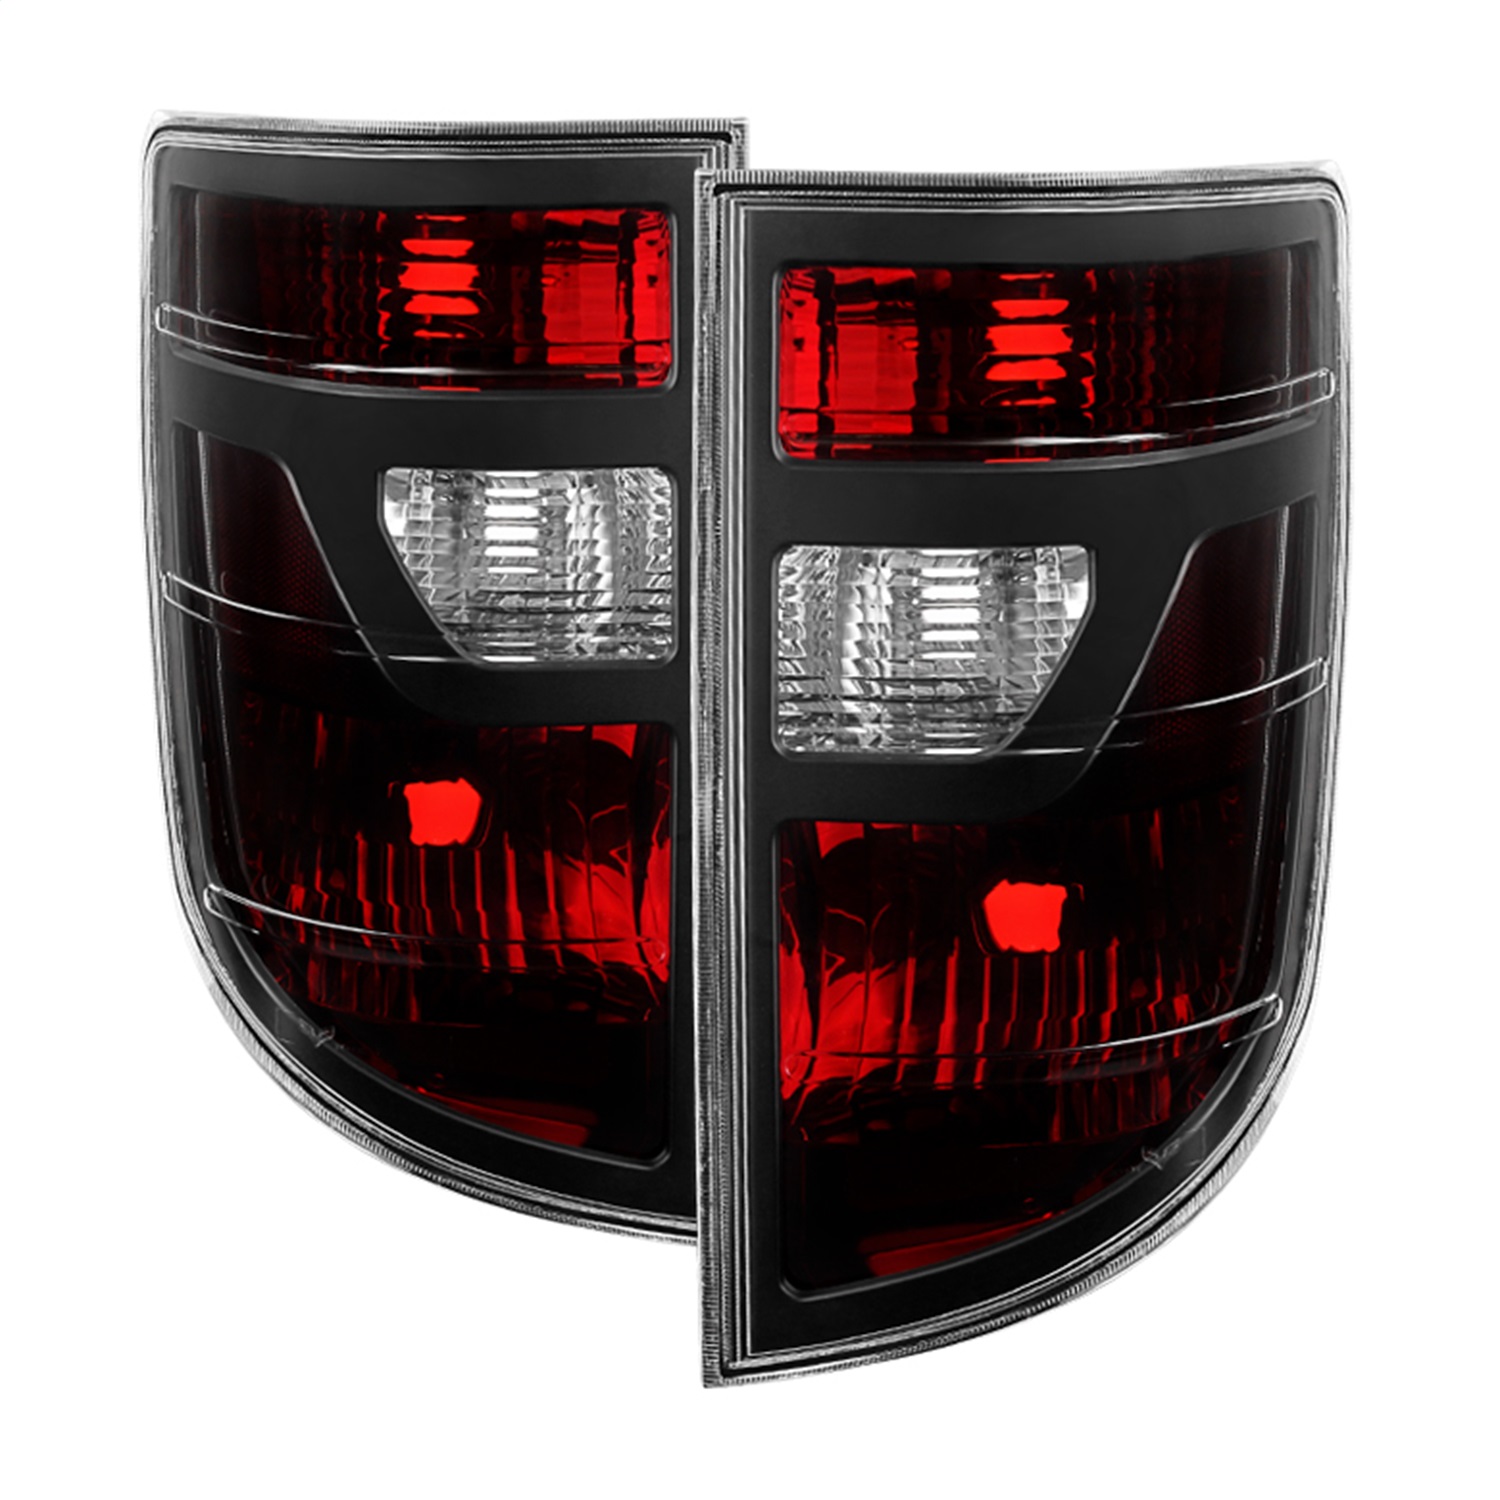 Spyder Auto 9033193 XTune Tail Lights Fits 06-08 Ridgeline